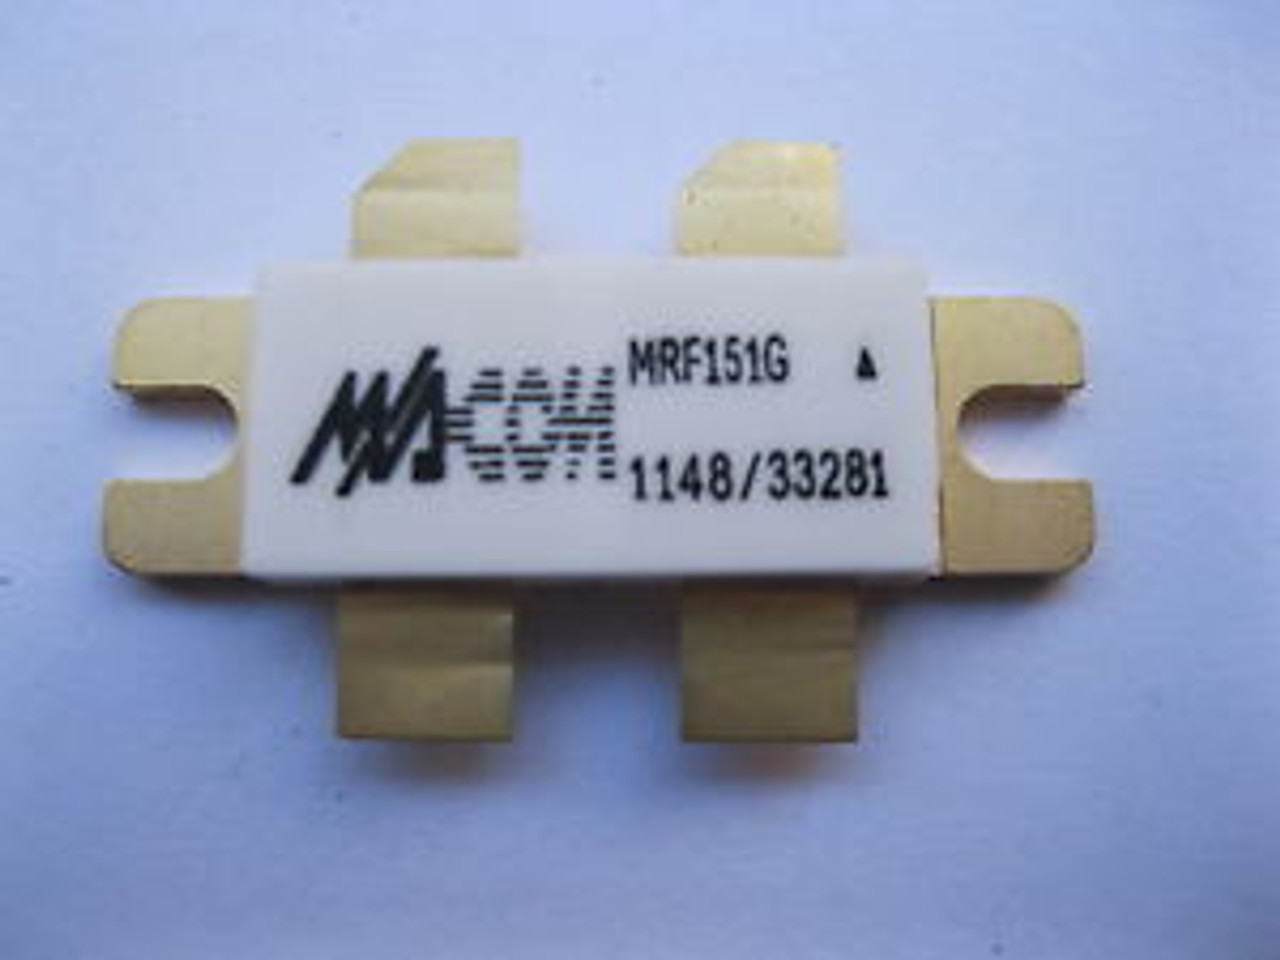 1 x Motorola MRF151G Power Mosfet N-Channel Transistor 